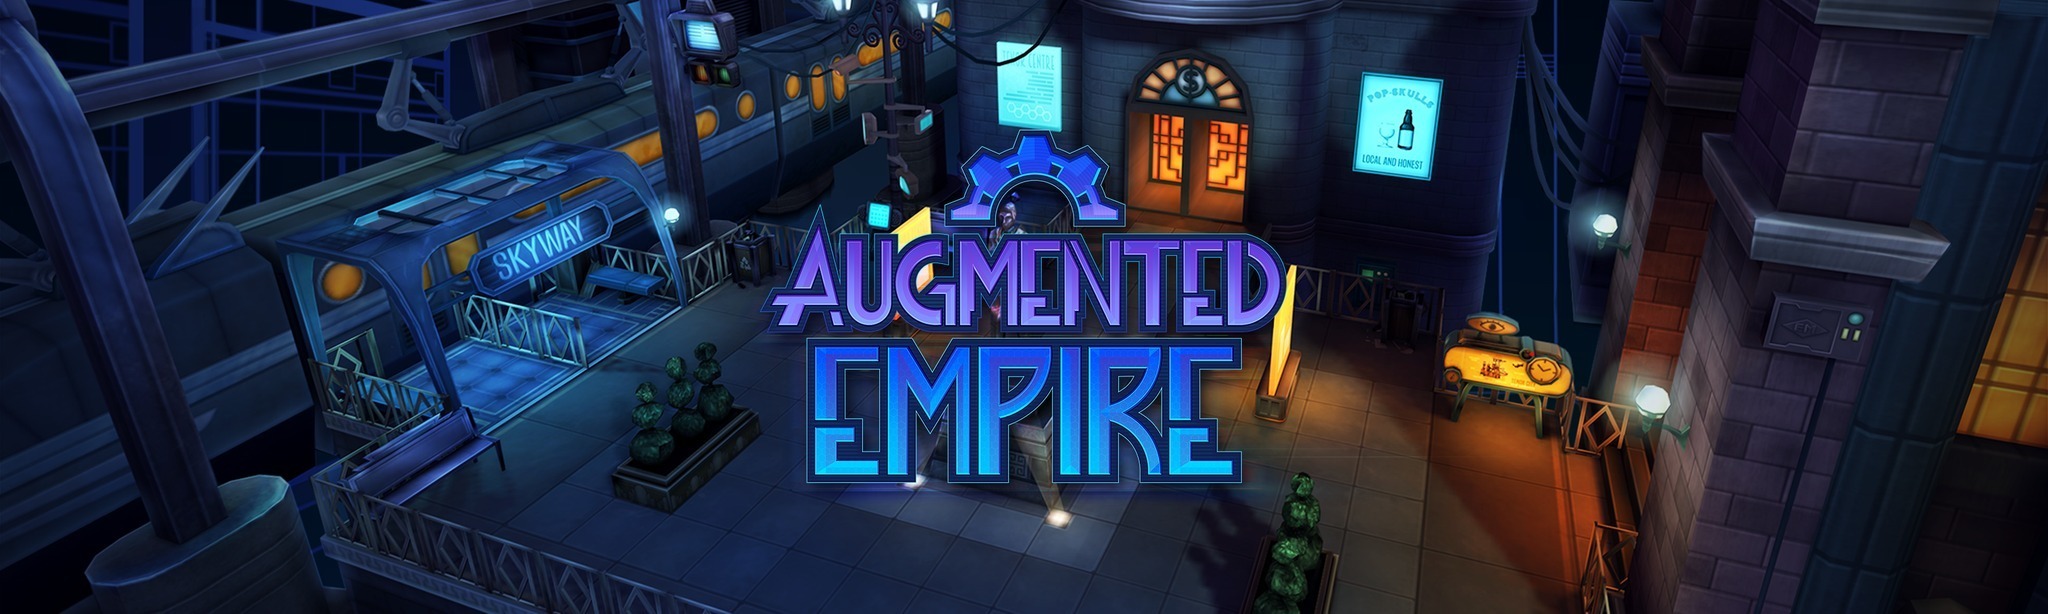 Augmented Empire